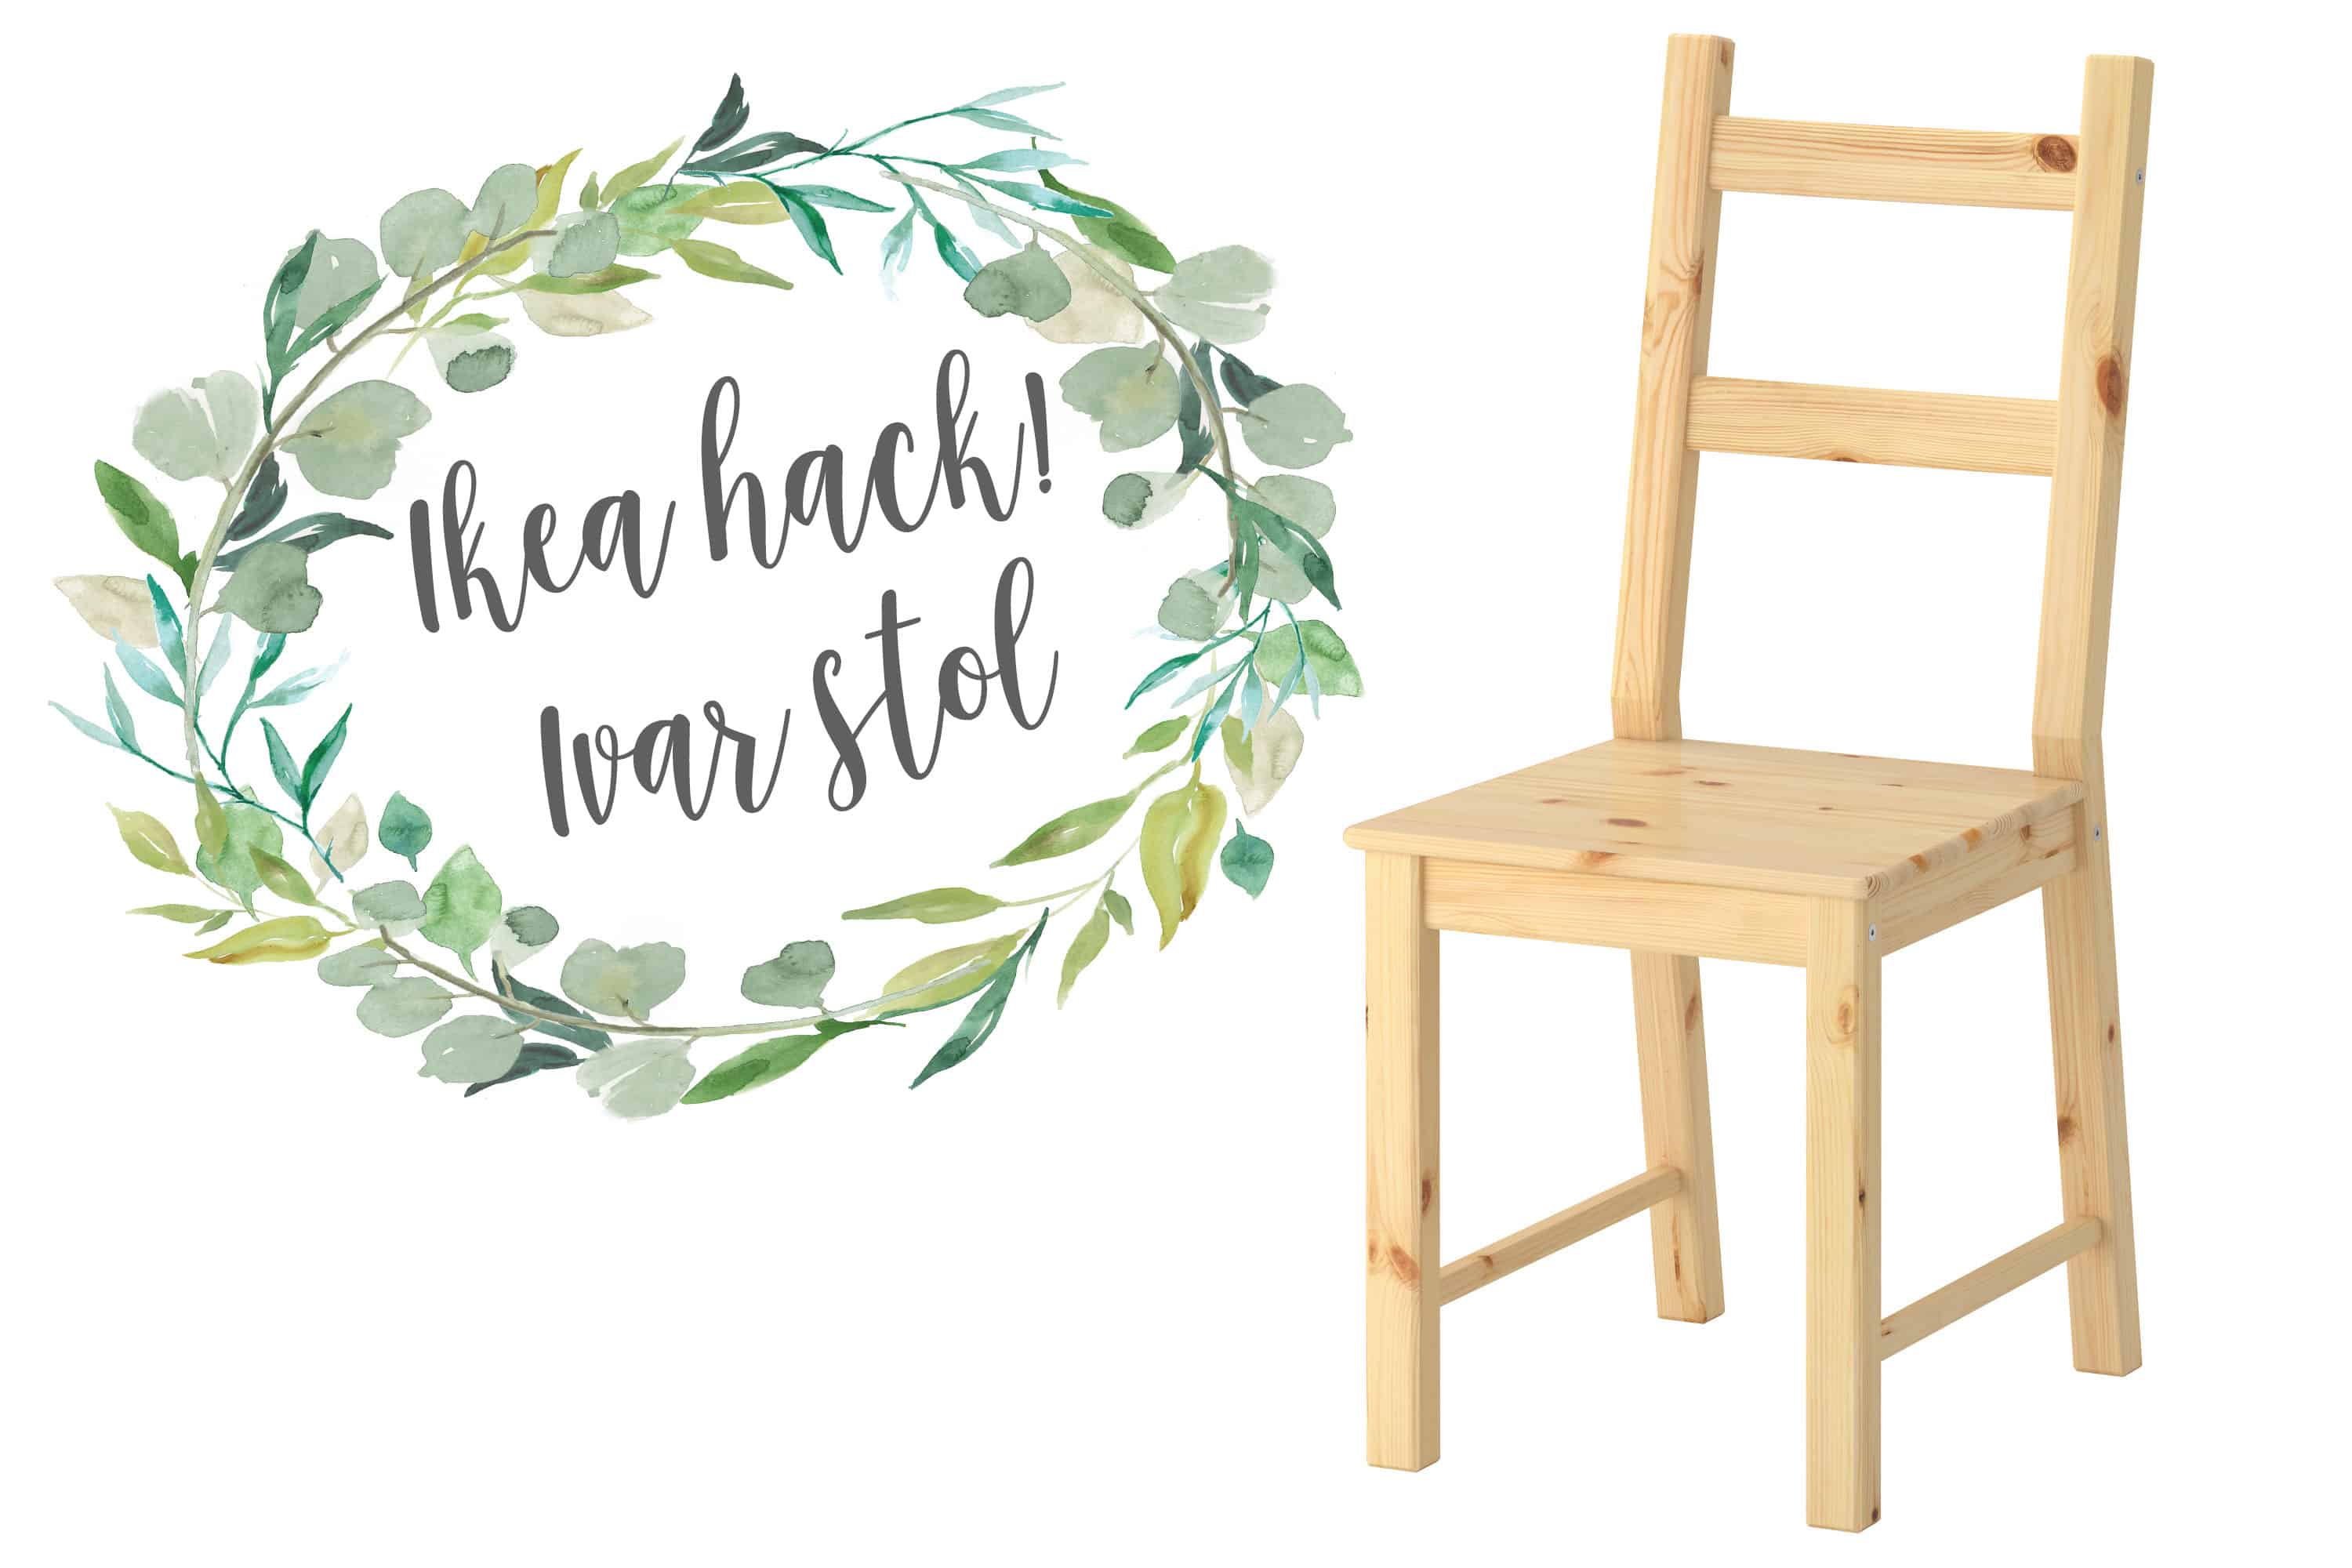 Ikea hack Ivar stol